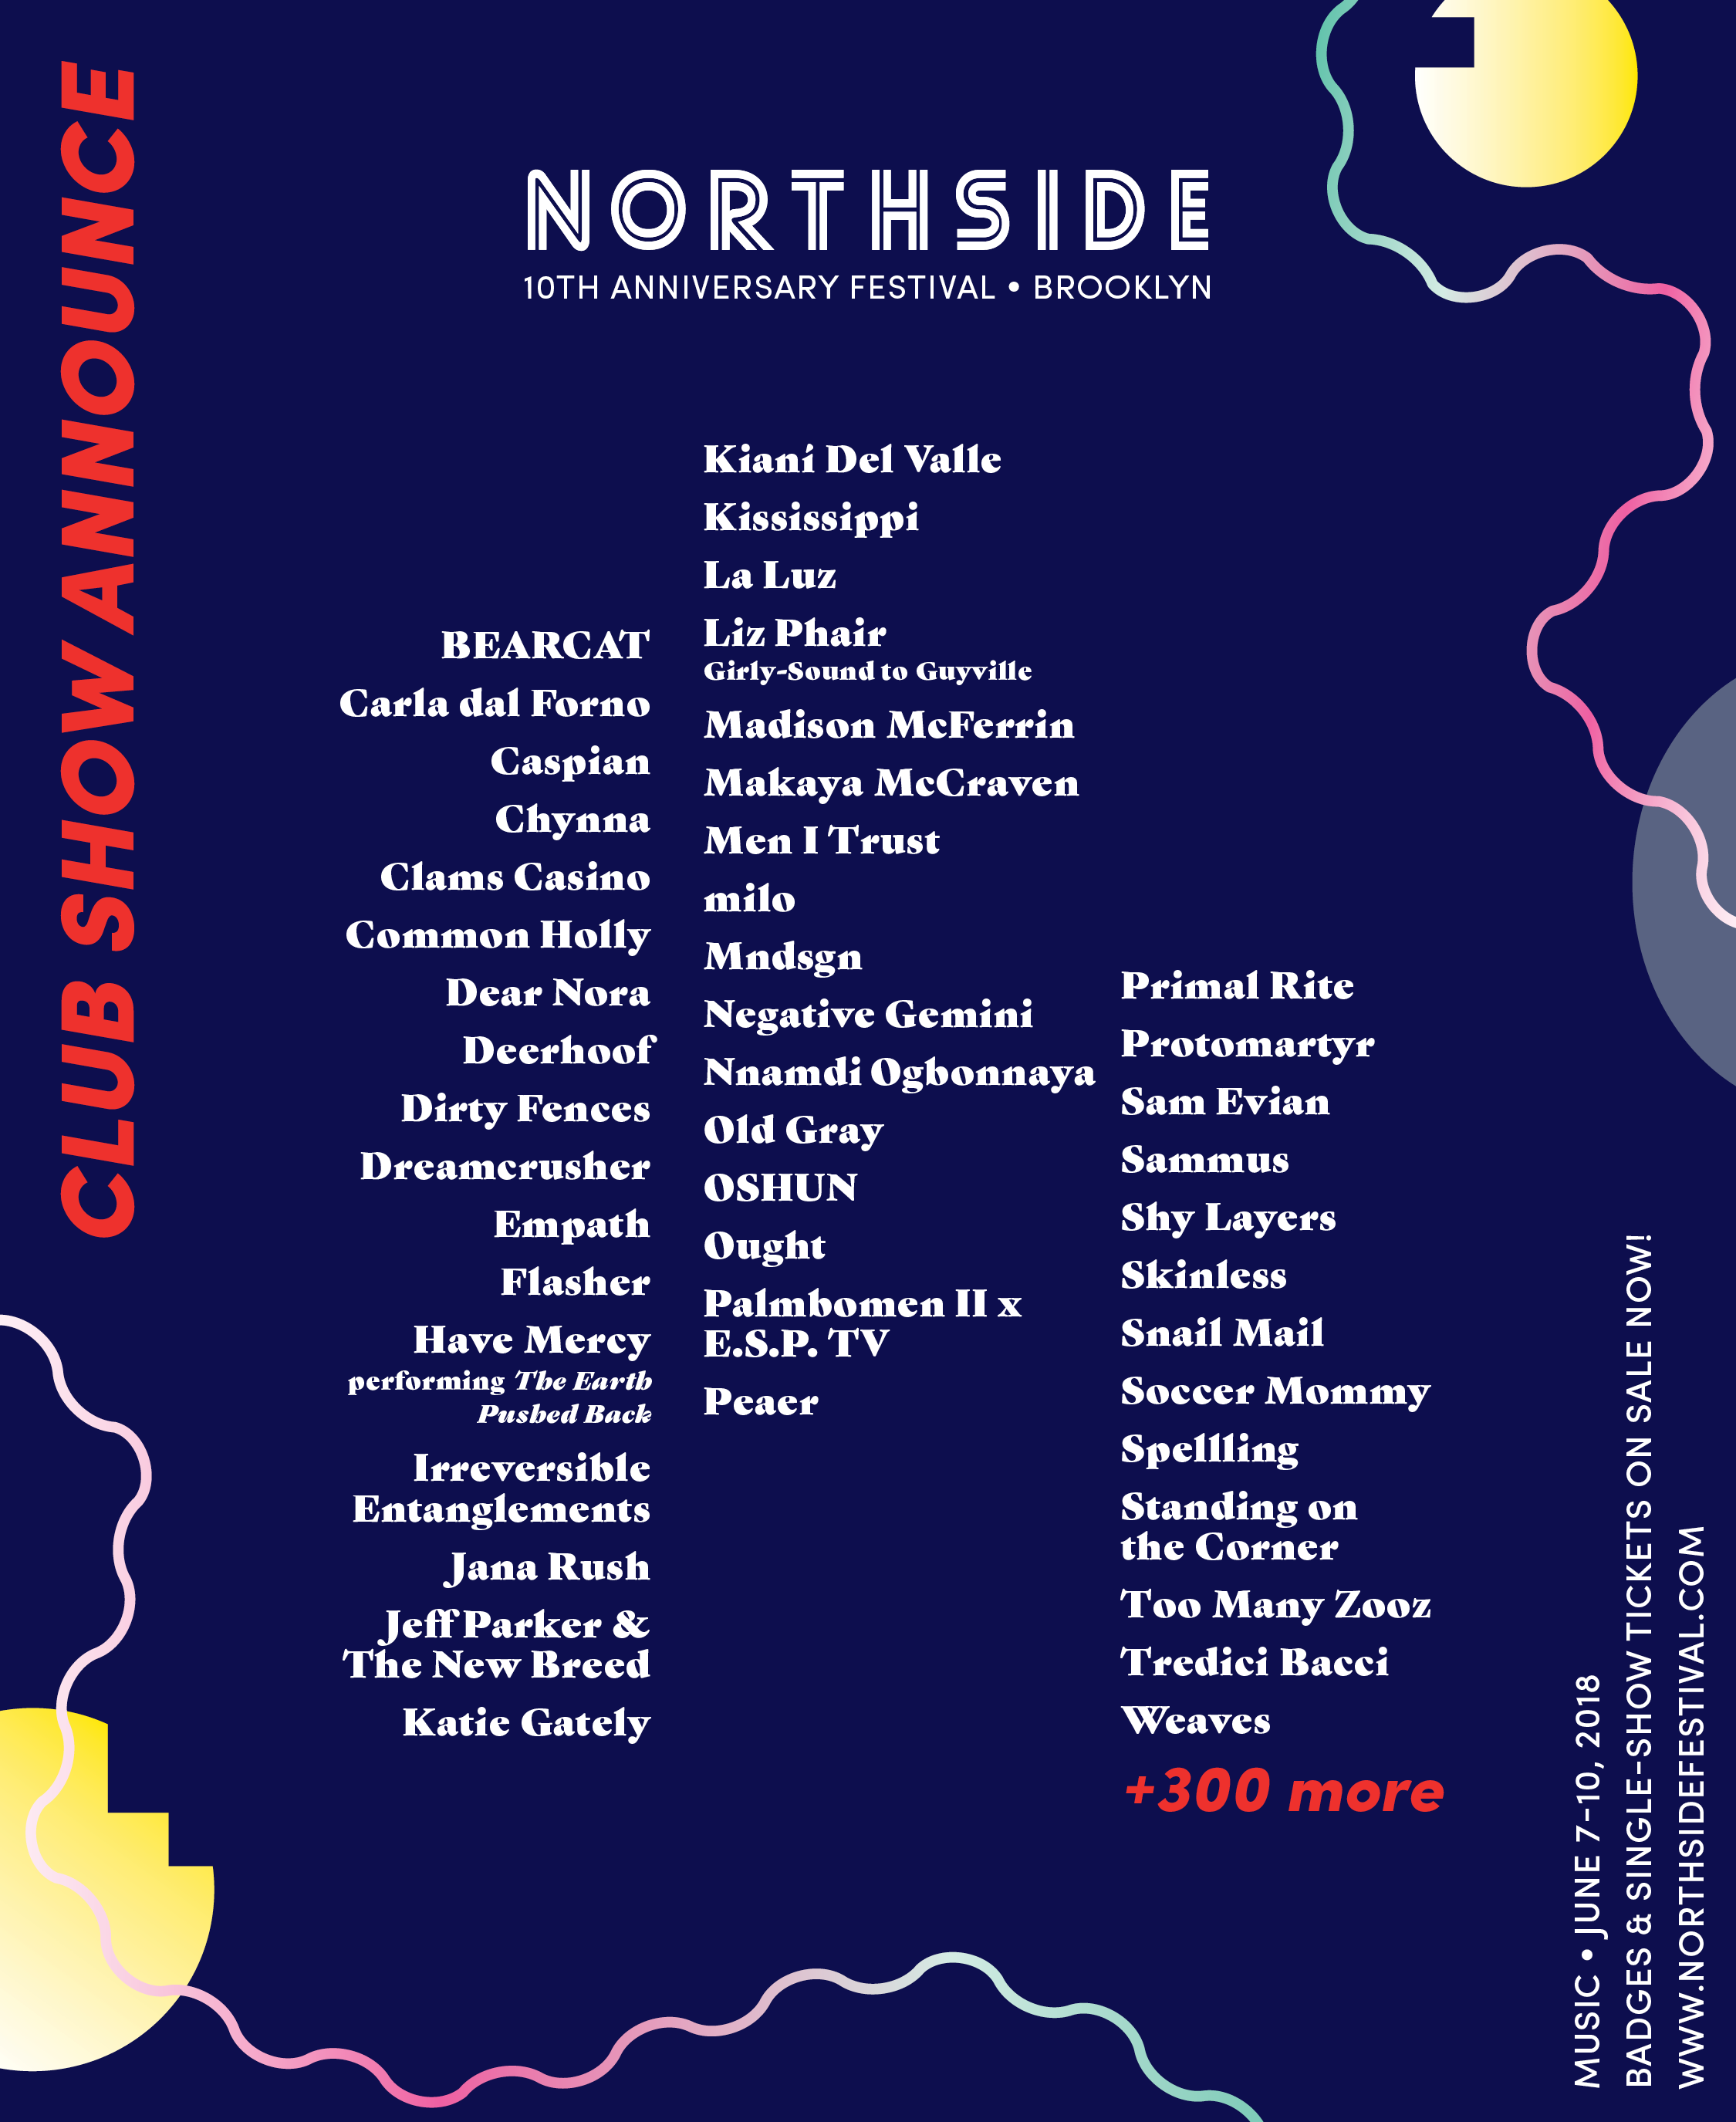 Northside Festival 2018 lineup